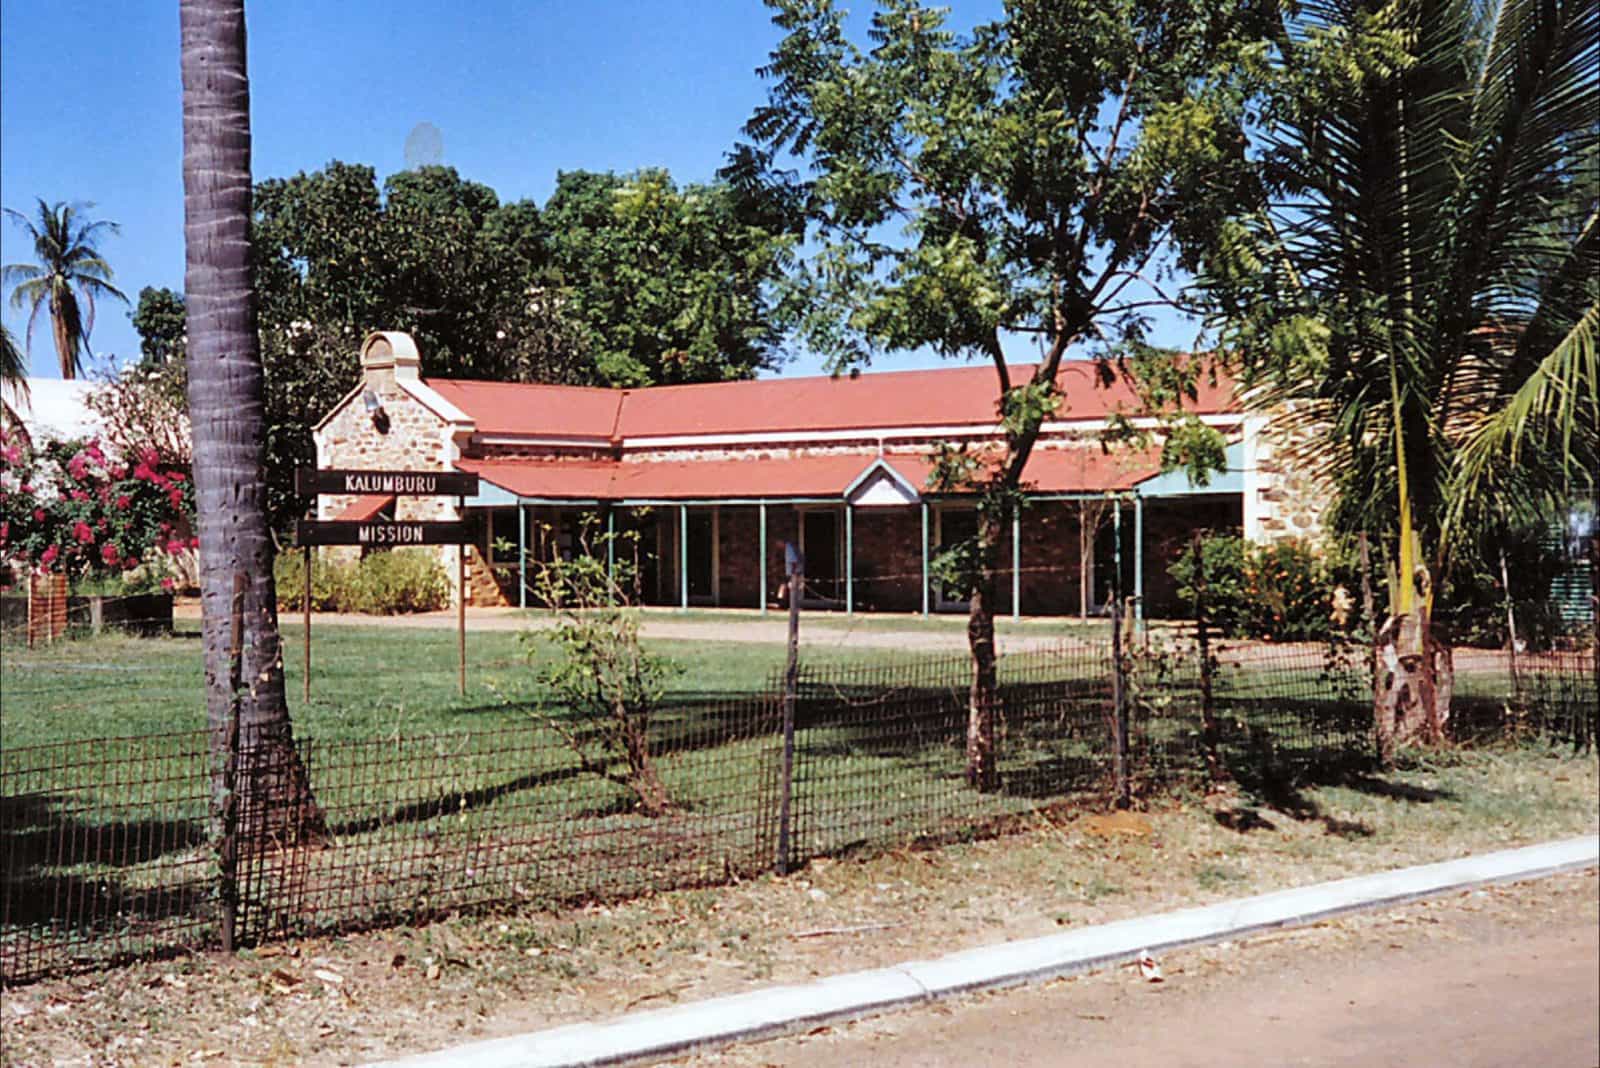 Kalumburu Mission, Kalumburu, Western Australia